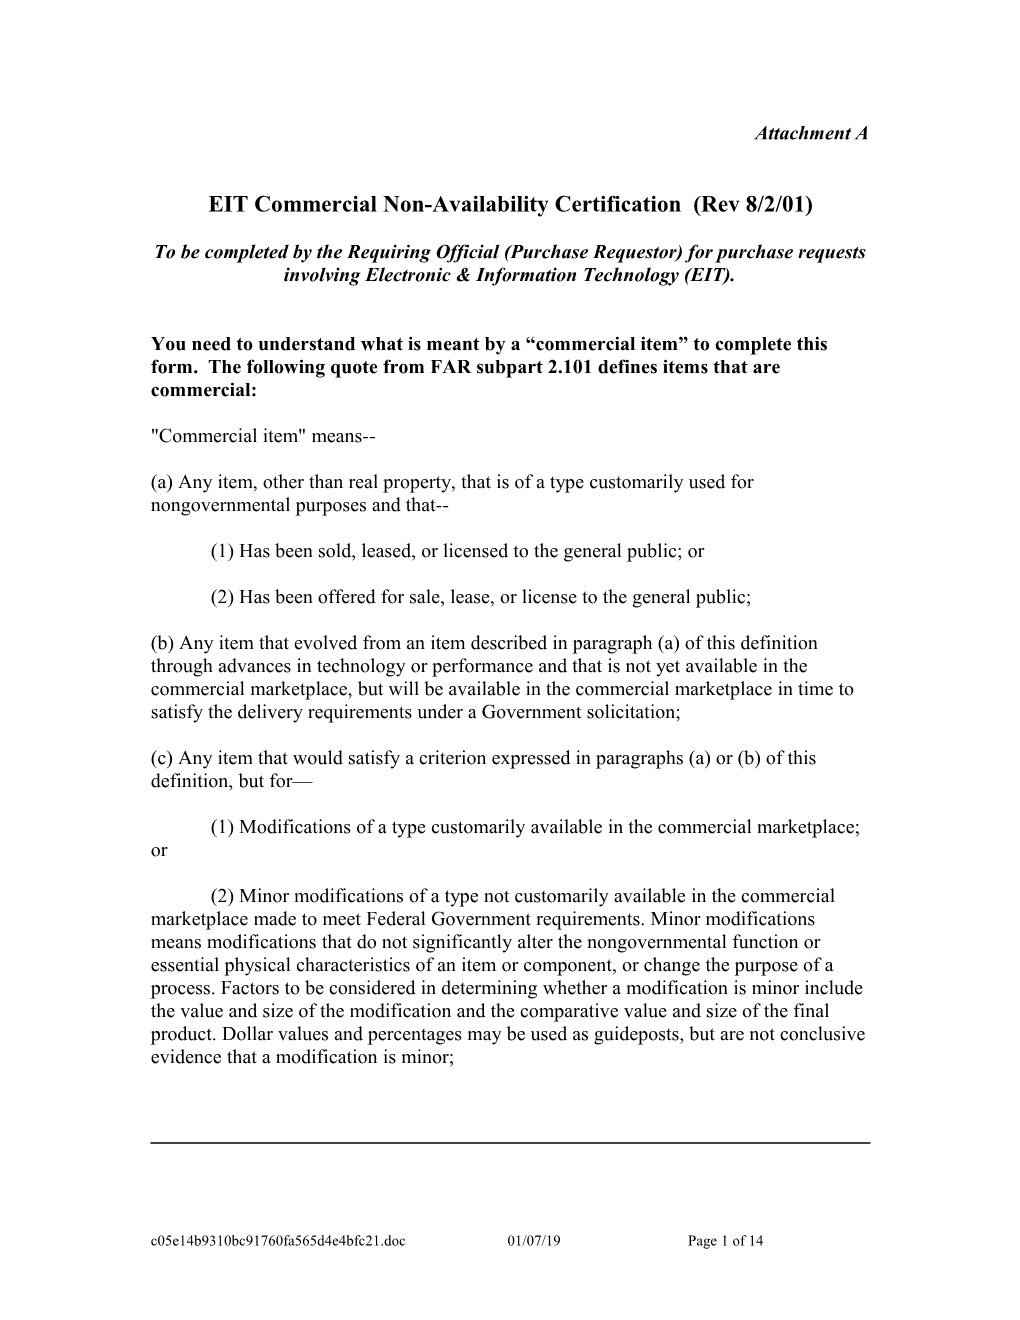 Attachment a - EIT Commercial Non-Availability Certification